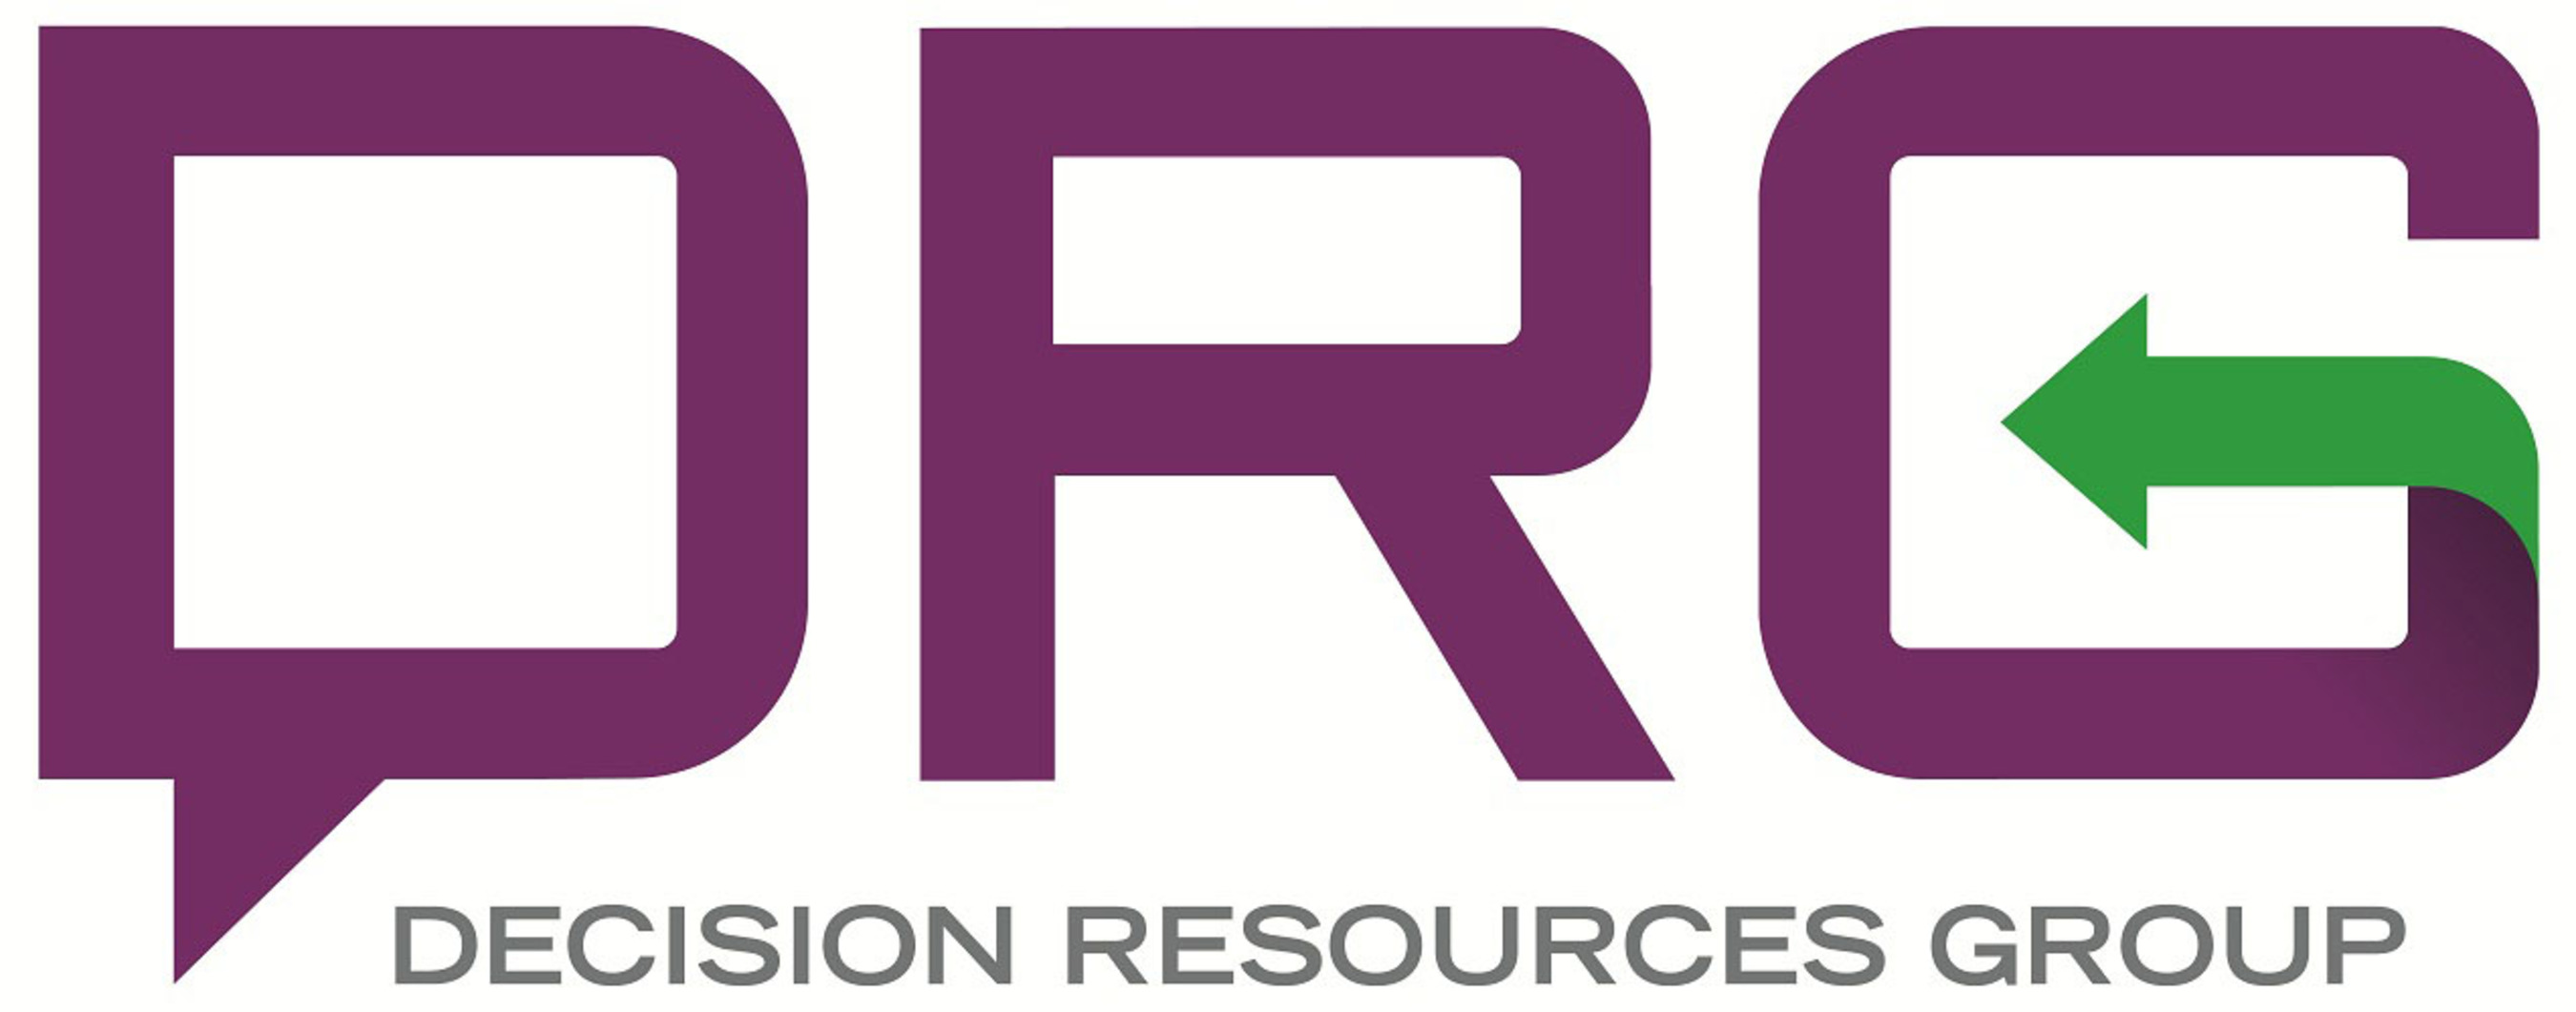 Decision Resources Group Logo.